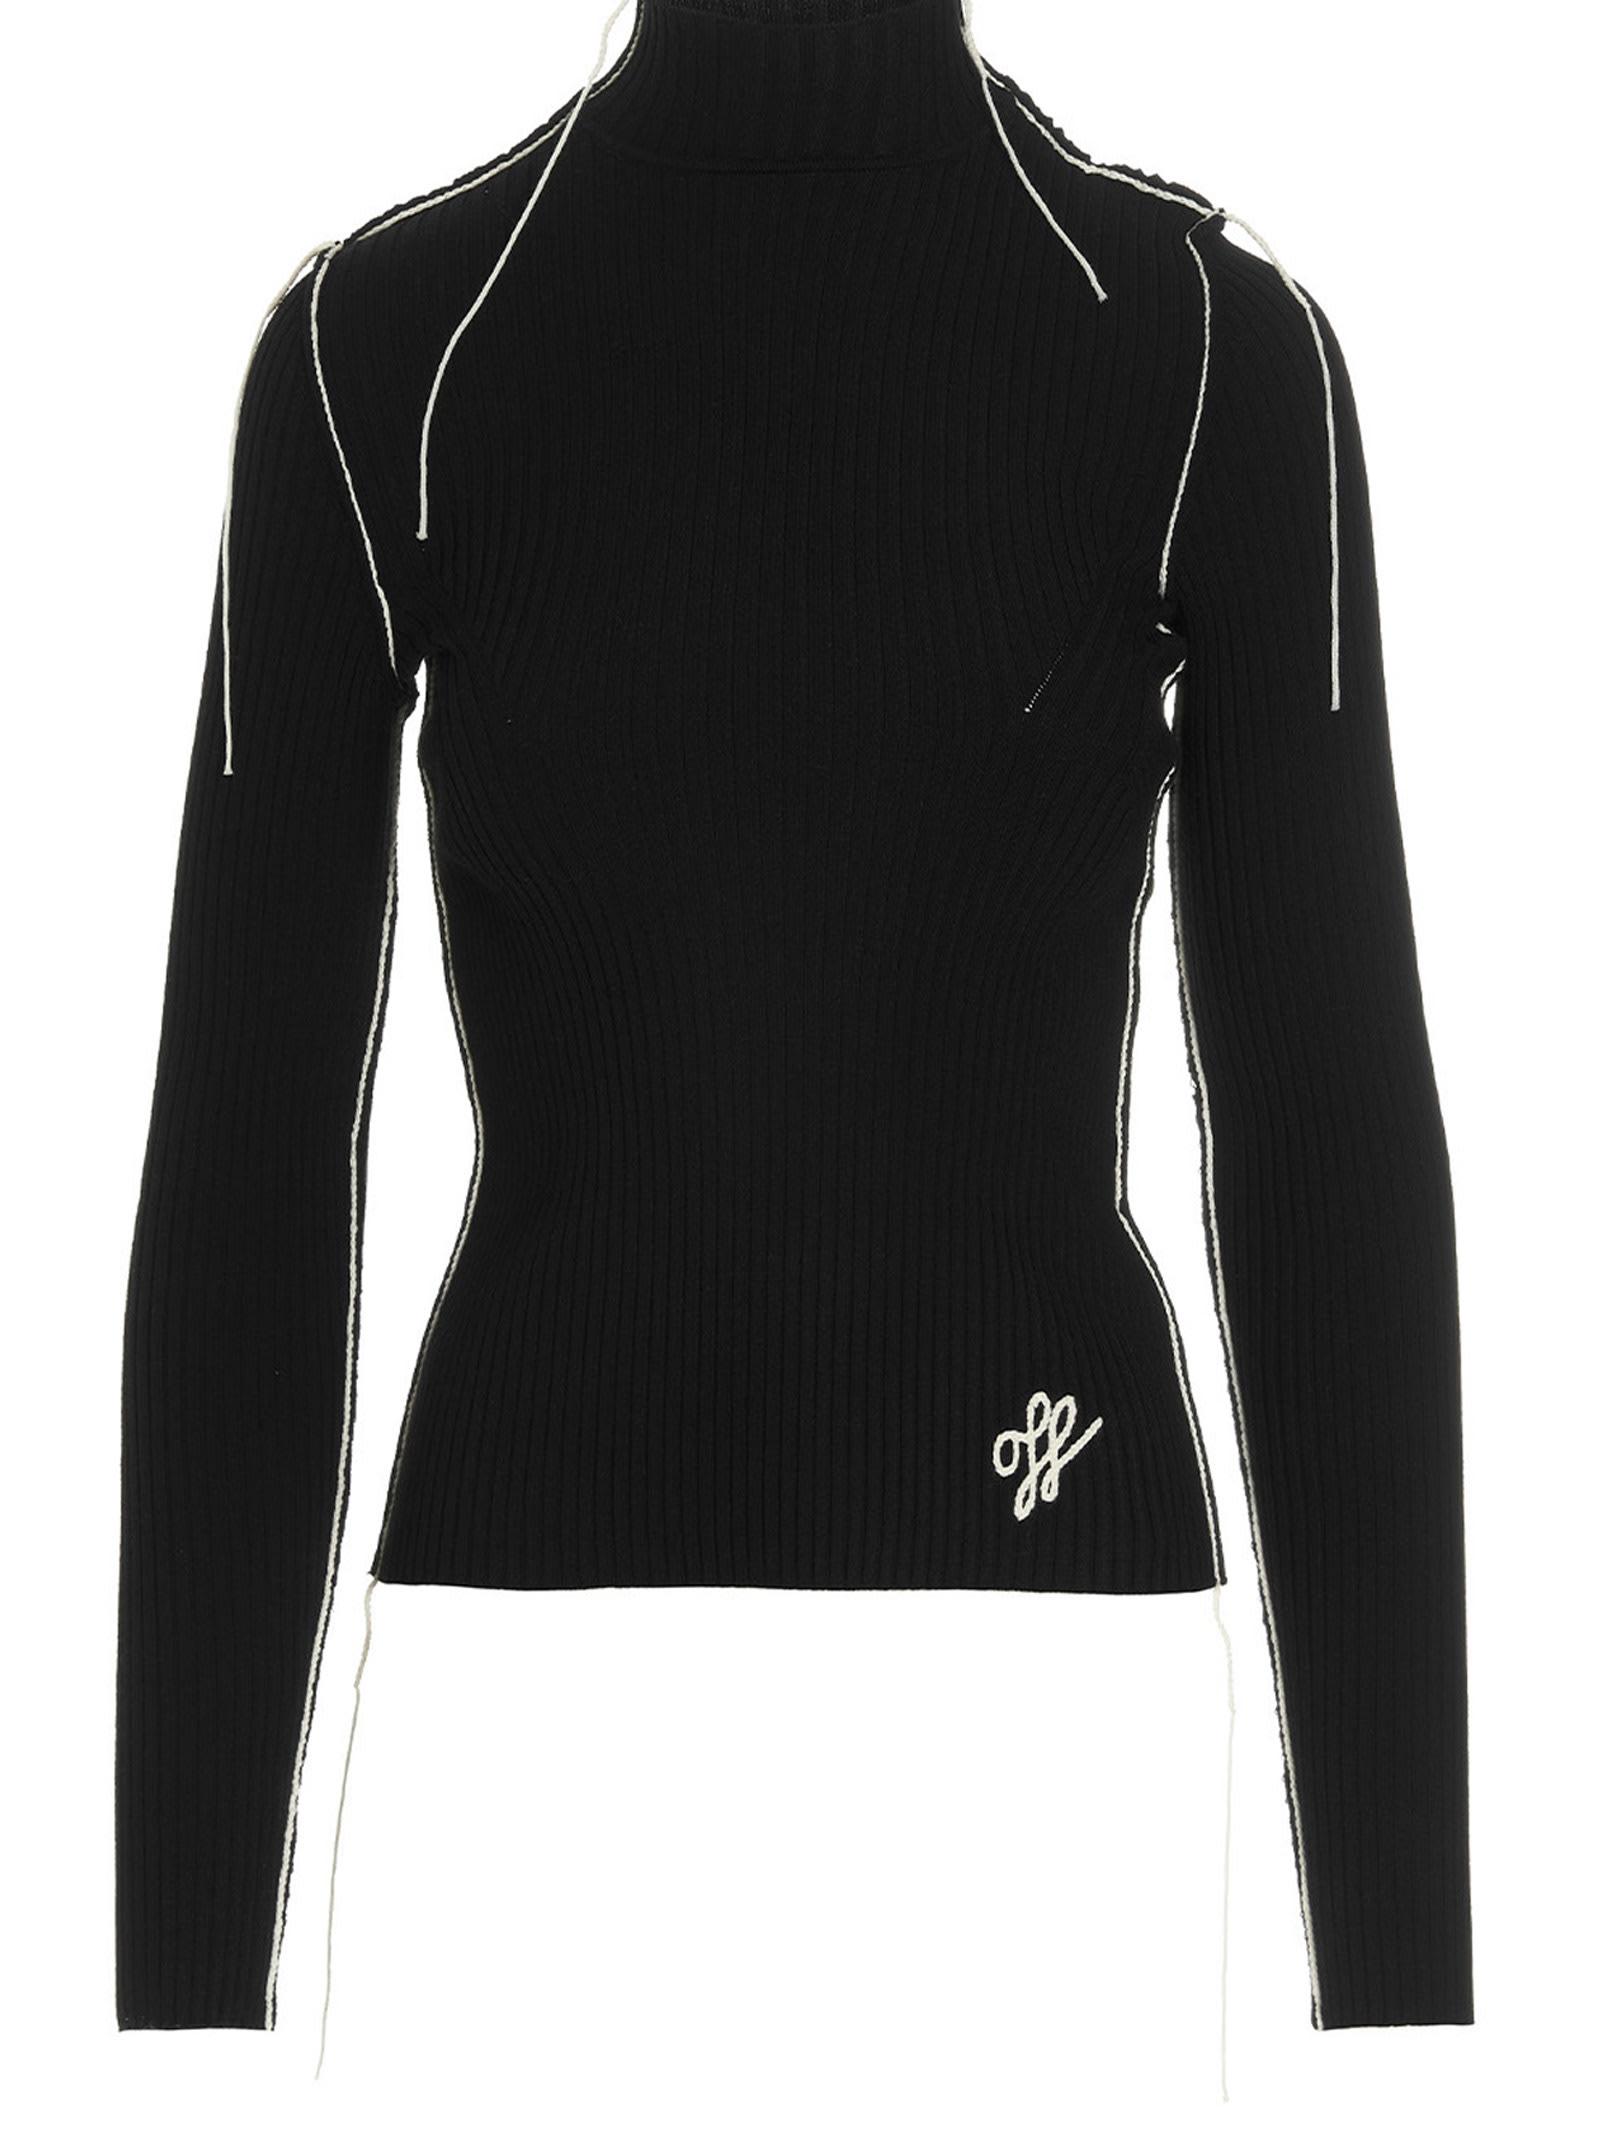 Off-White c/o Virgil Abloh Outline Sweater in Black | Lyst